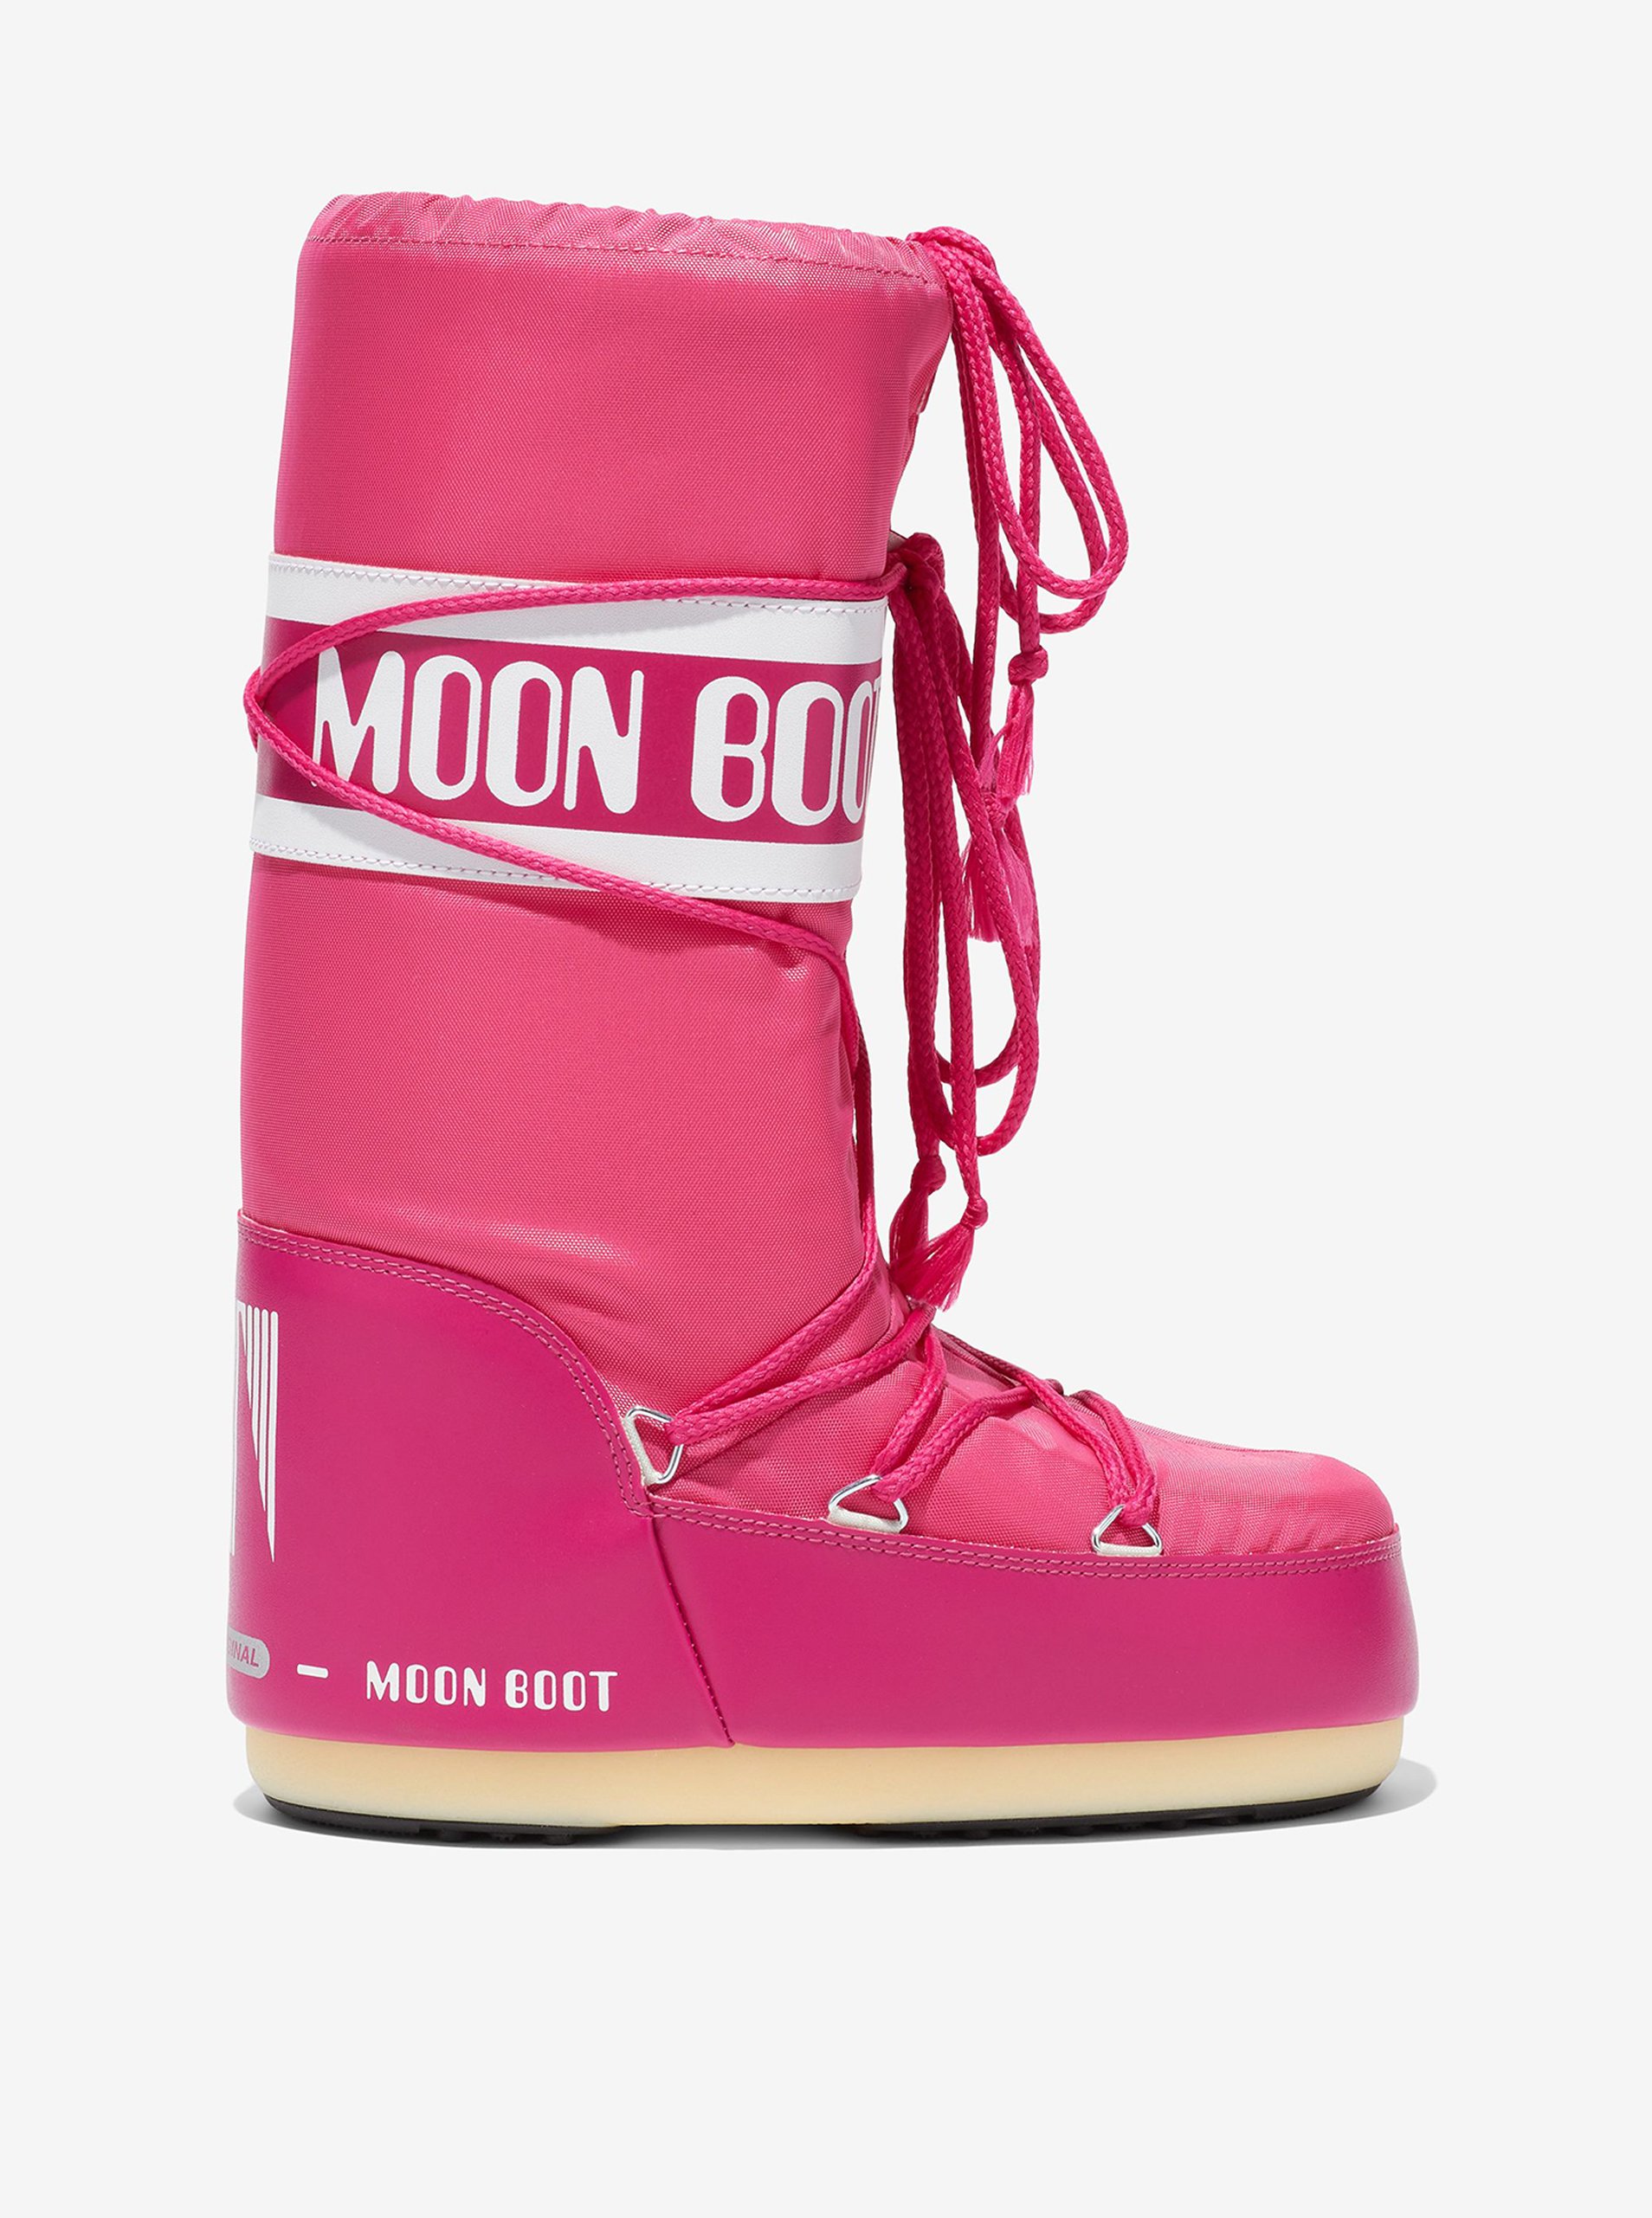 Lacno Zimná obuv pre ženy Moon Boot - tmavoružová